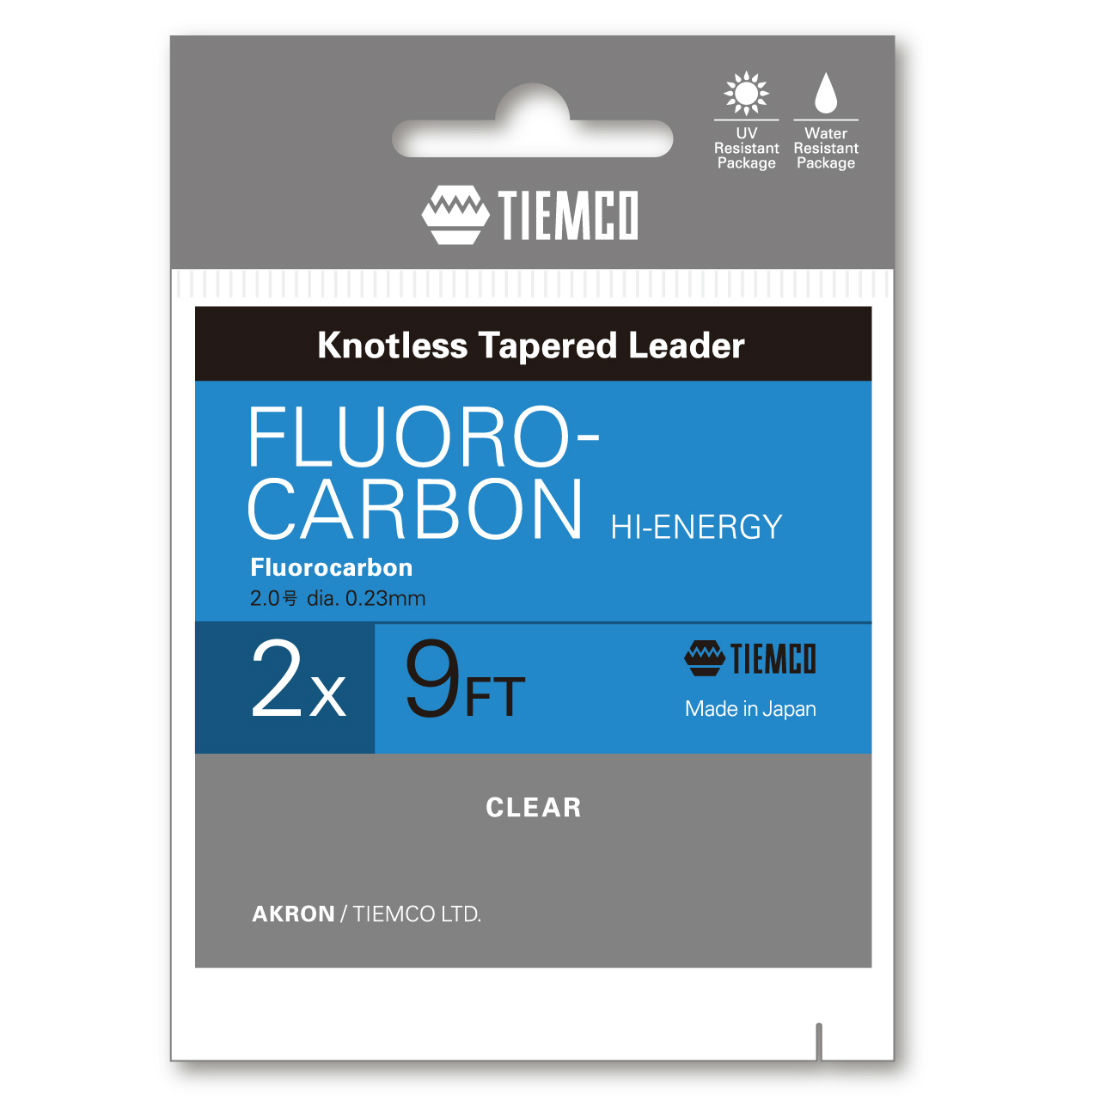 INAINTAS FLY TIEMCO FLUOROCARBON HI-ENERGY LEADER 9ft 6X